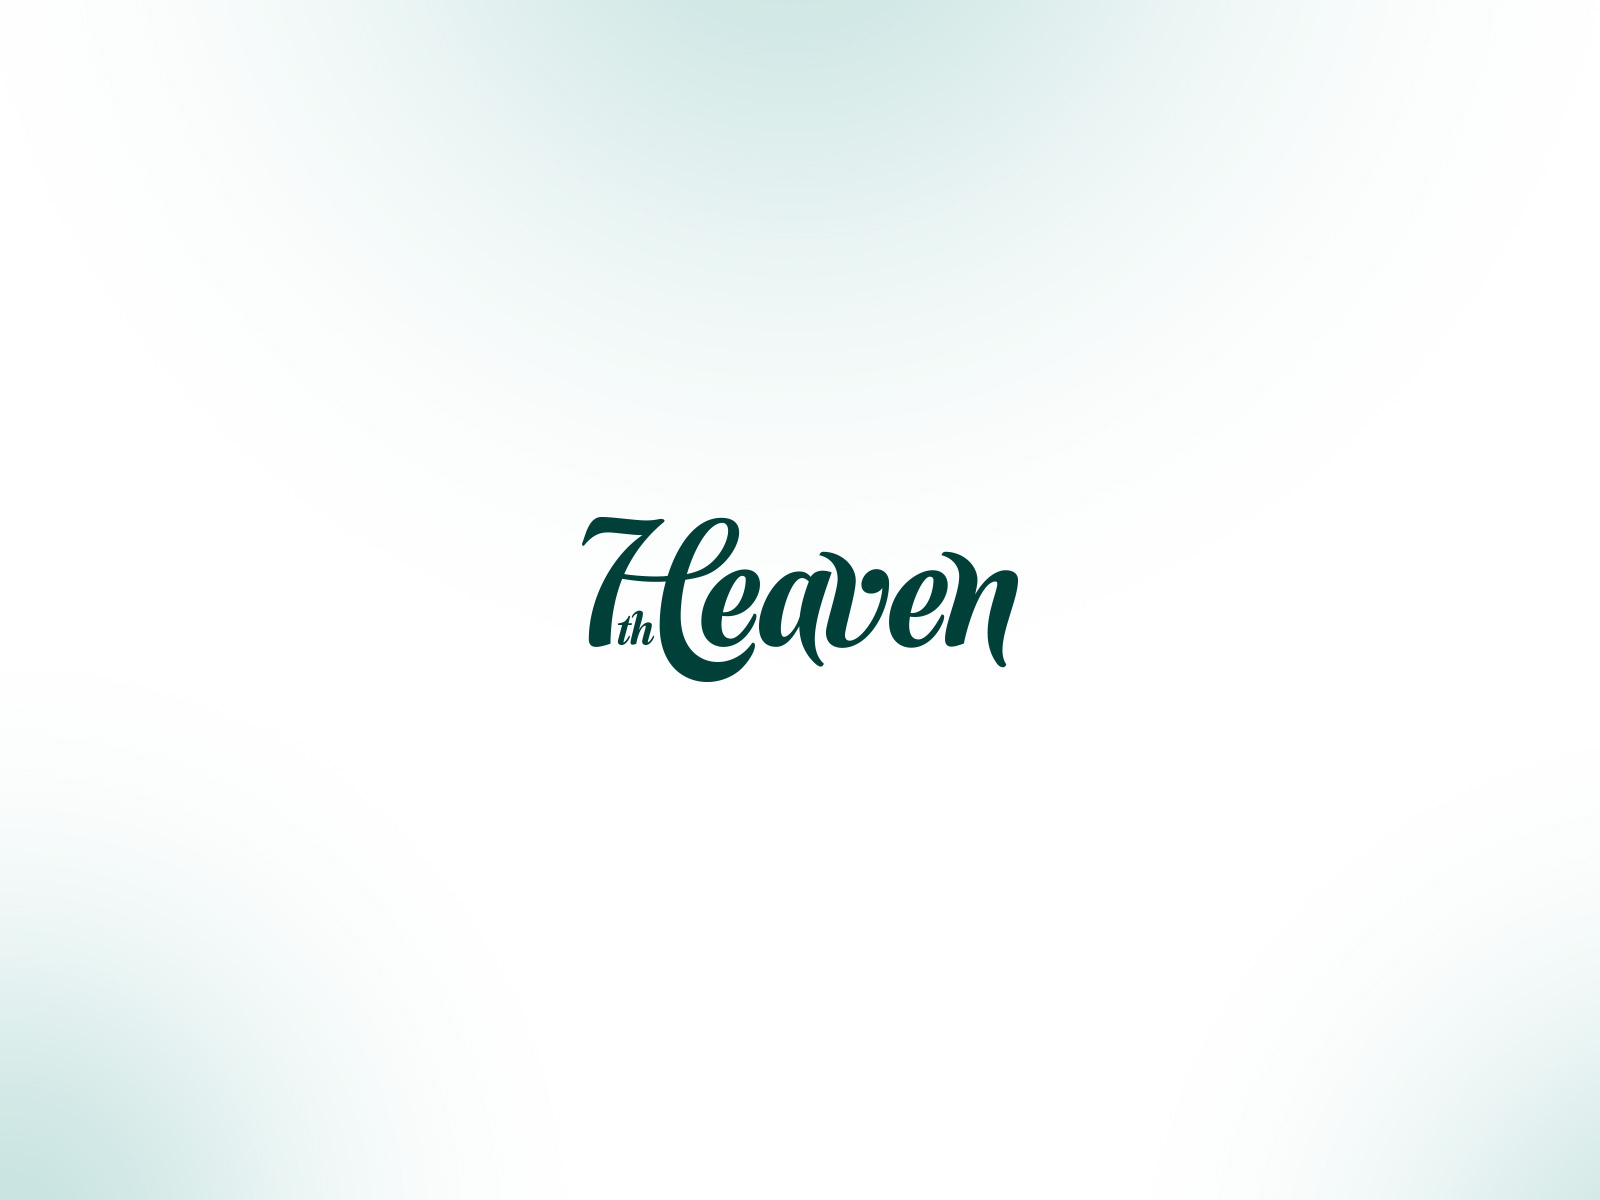 7th heaven logo design2